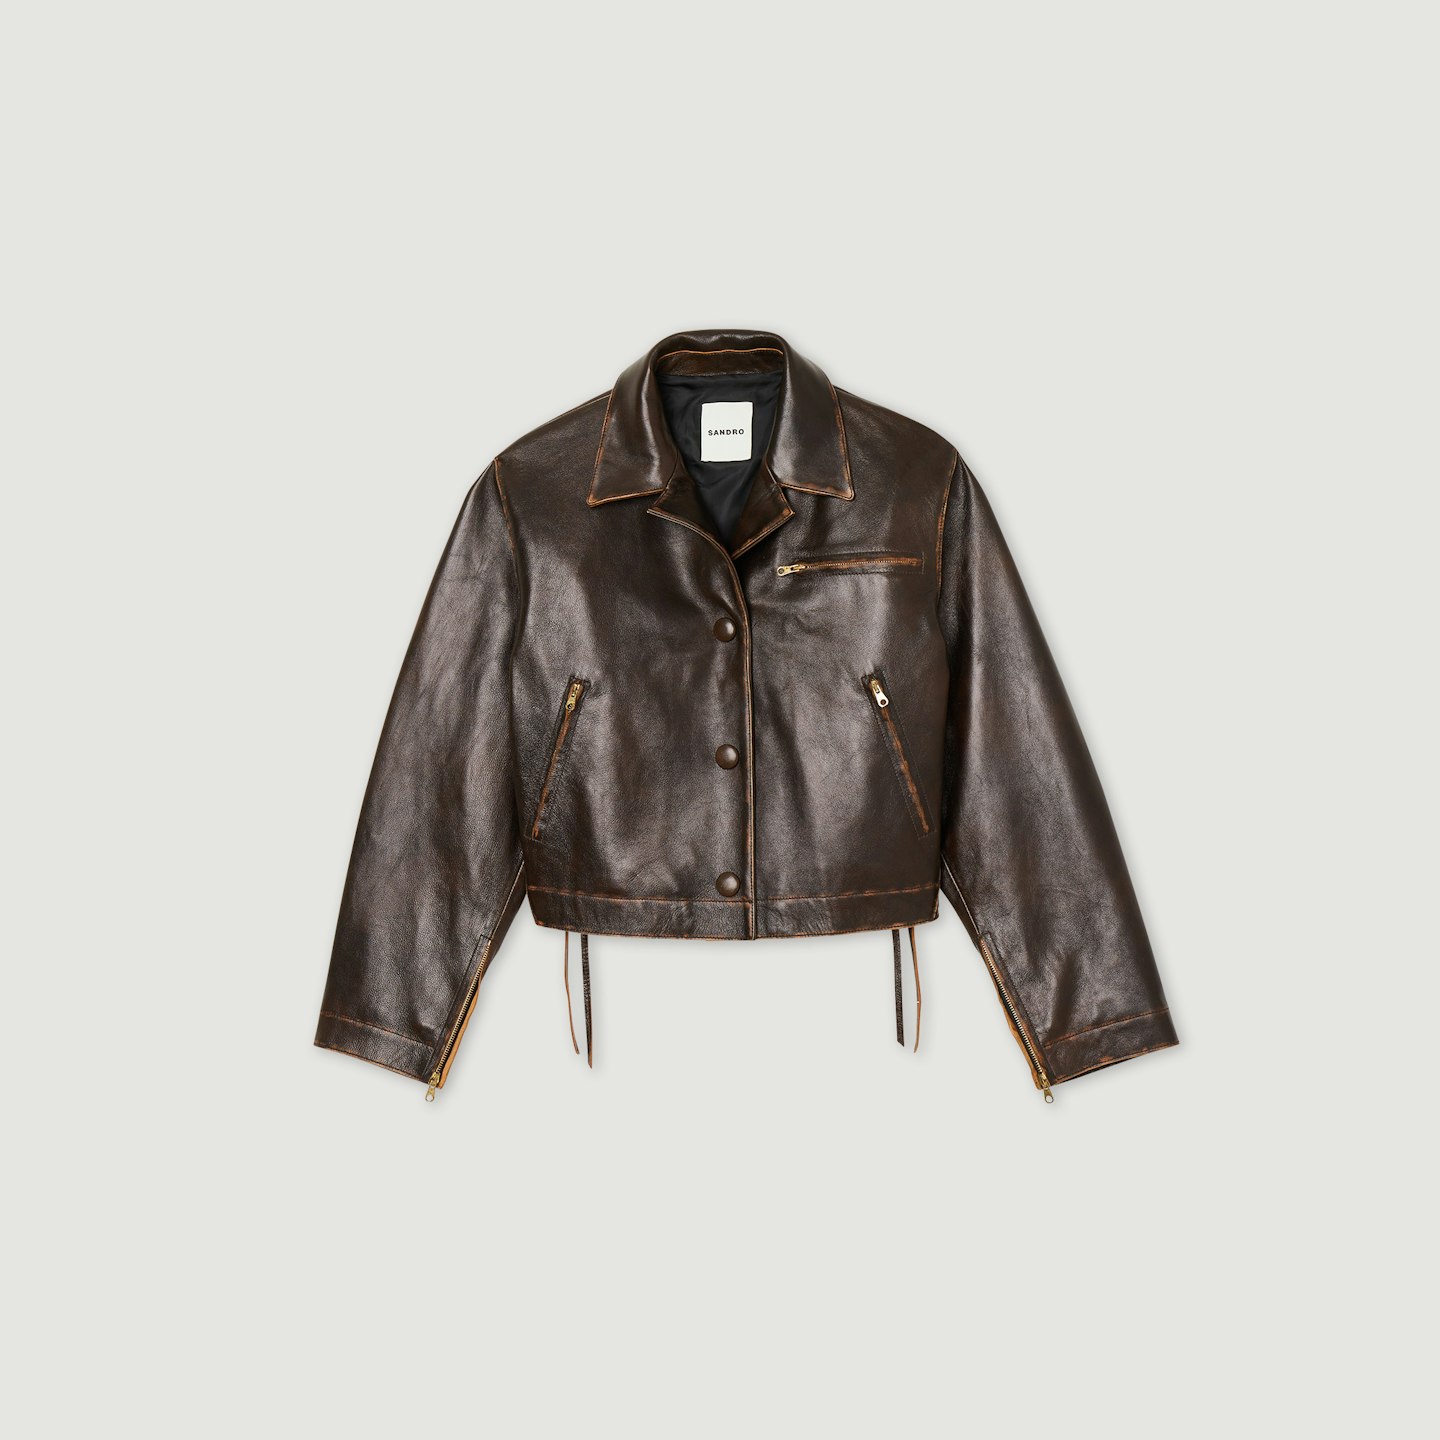 Sandro Paris, Distressed Leather Jacket